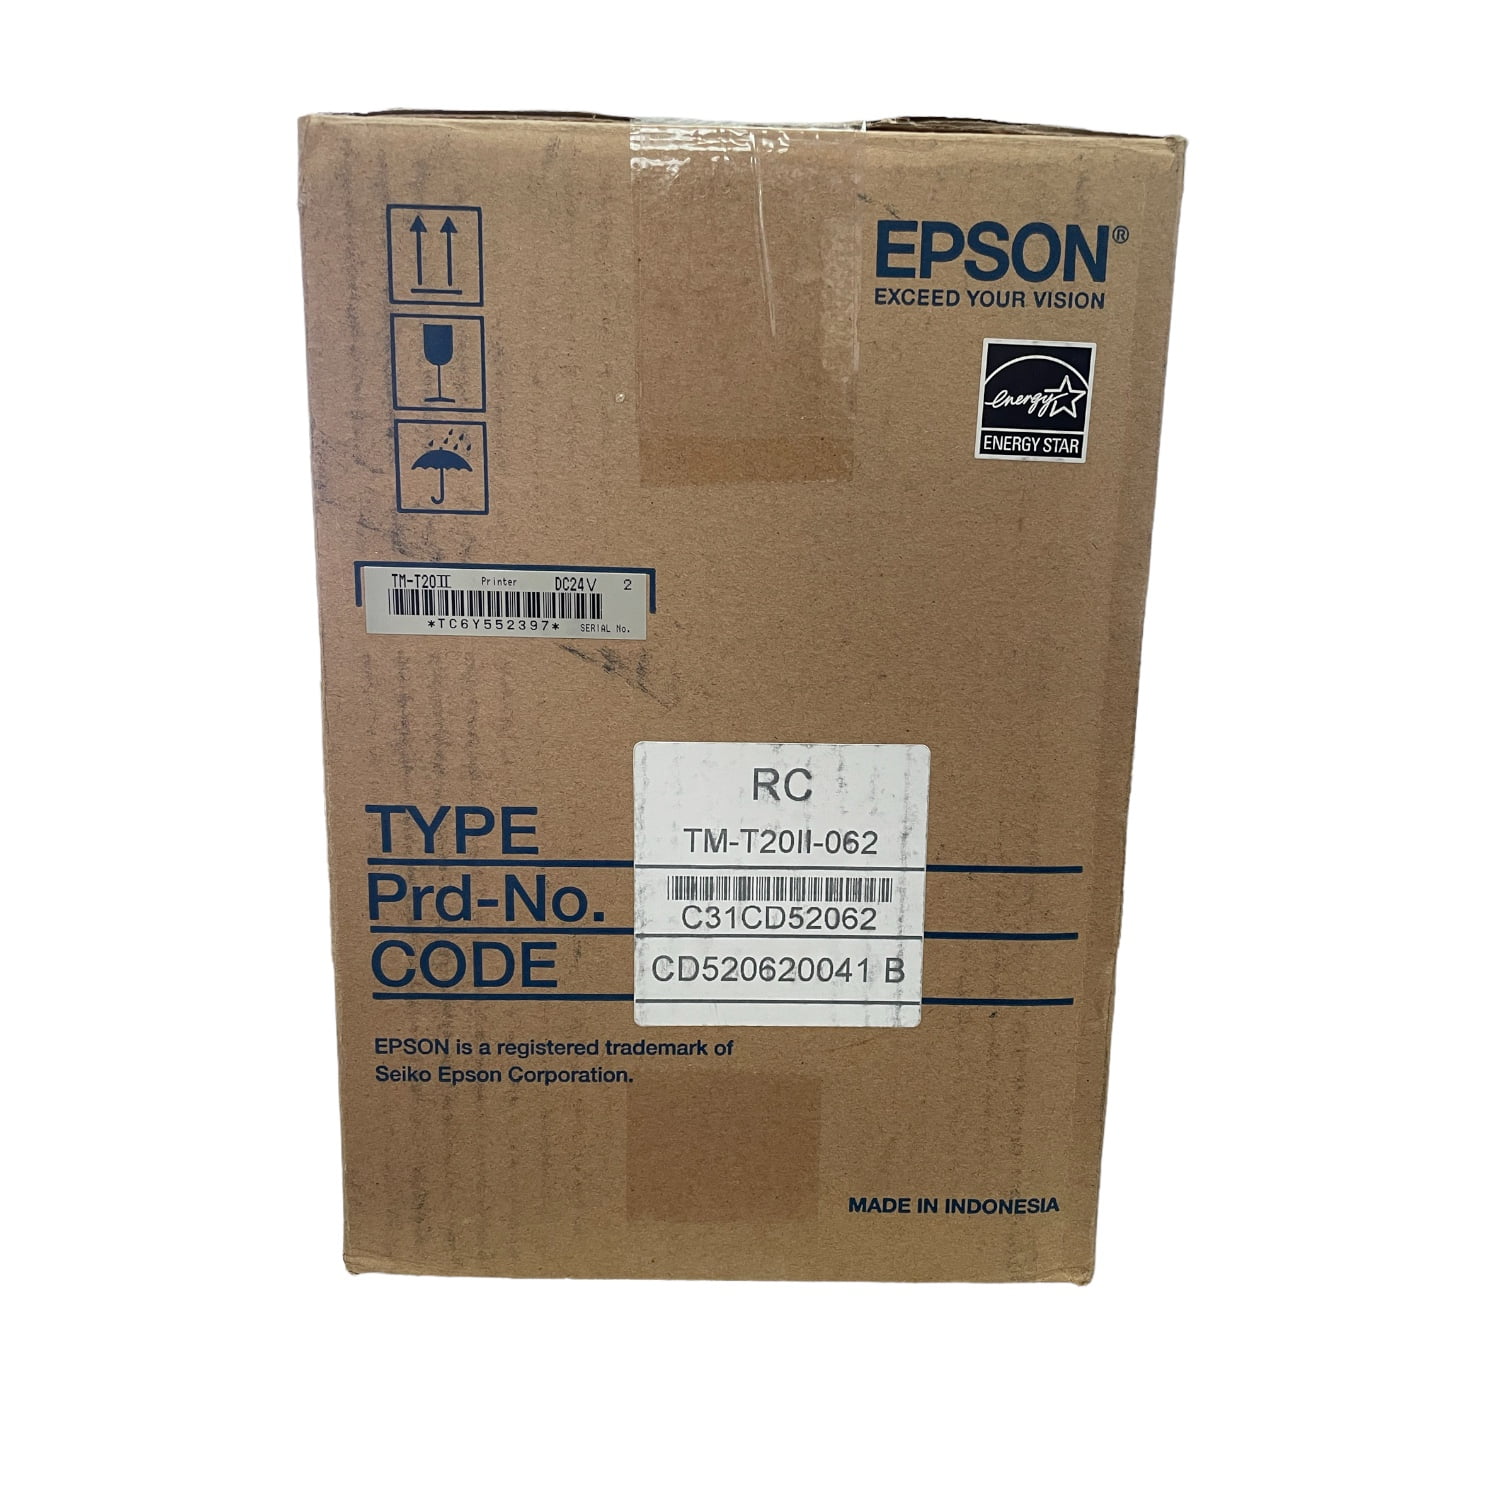 Epson C31CD52062 TM-T20II ReadyPrint Direct Thermal Printer Monochrome Brand NEW 